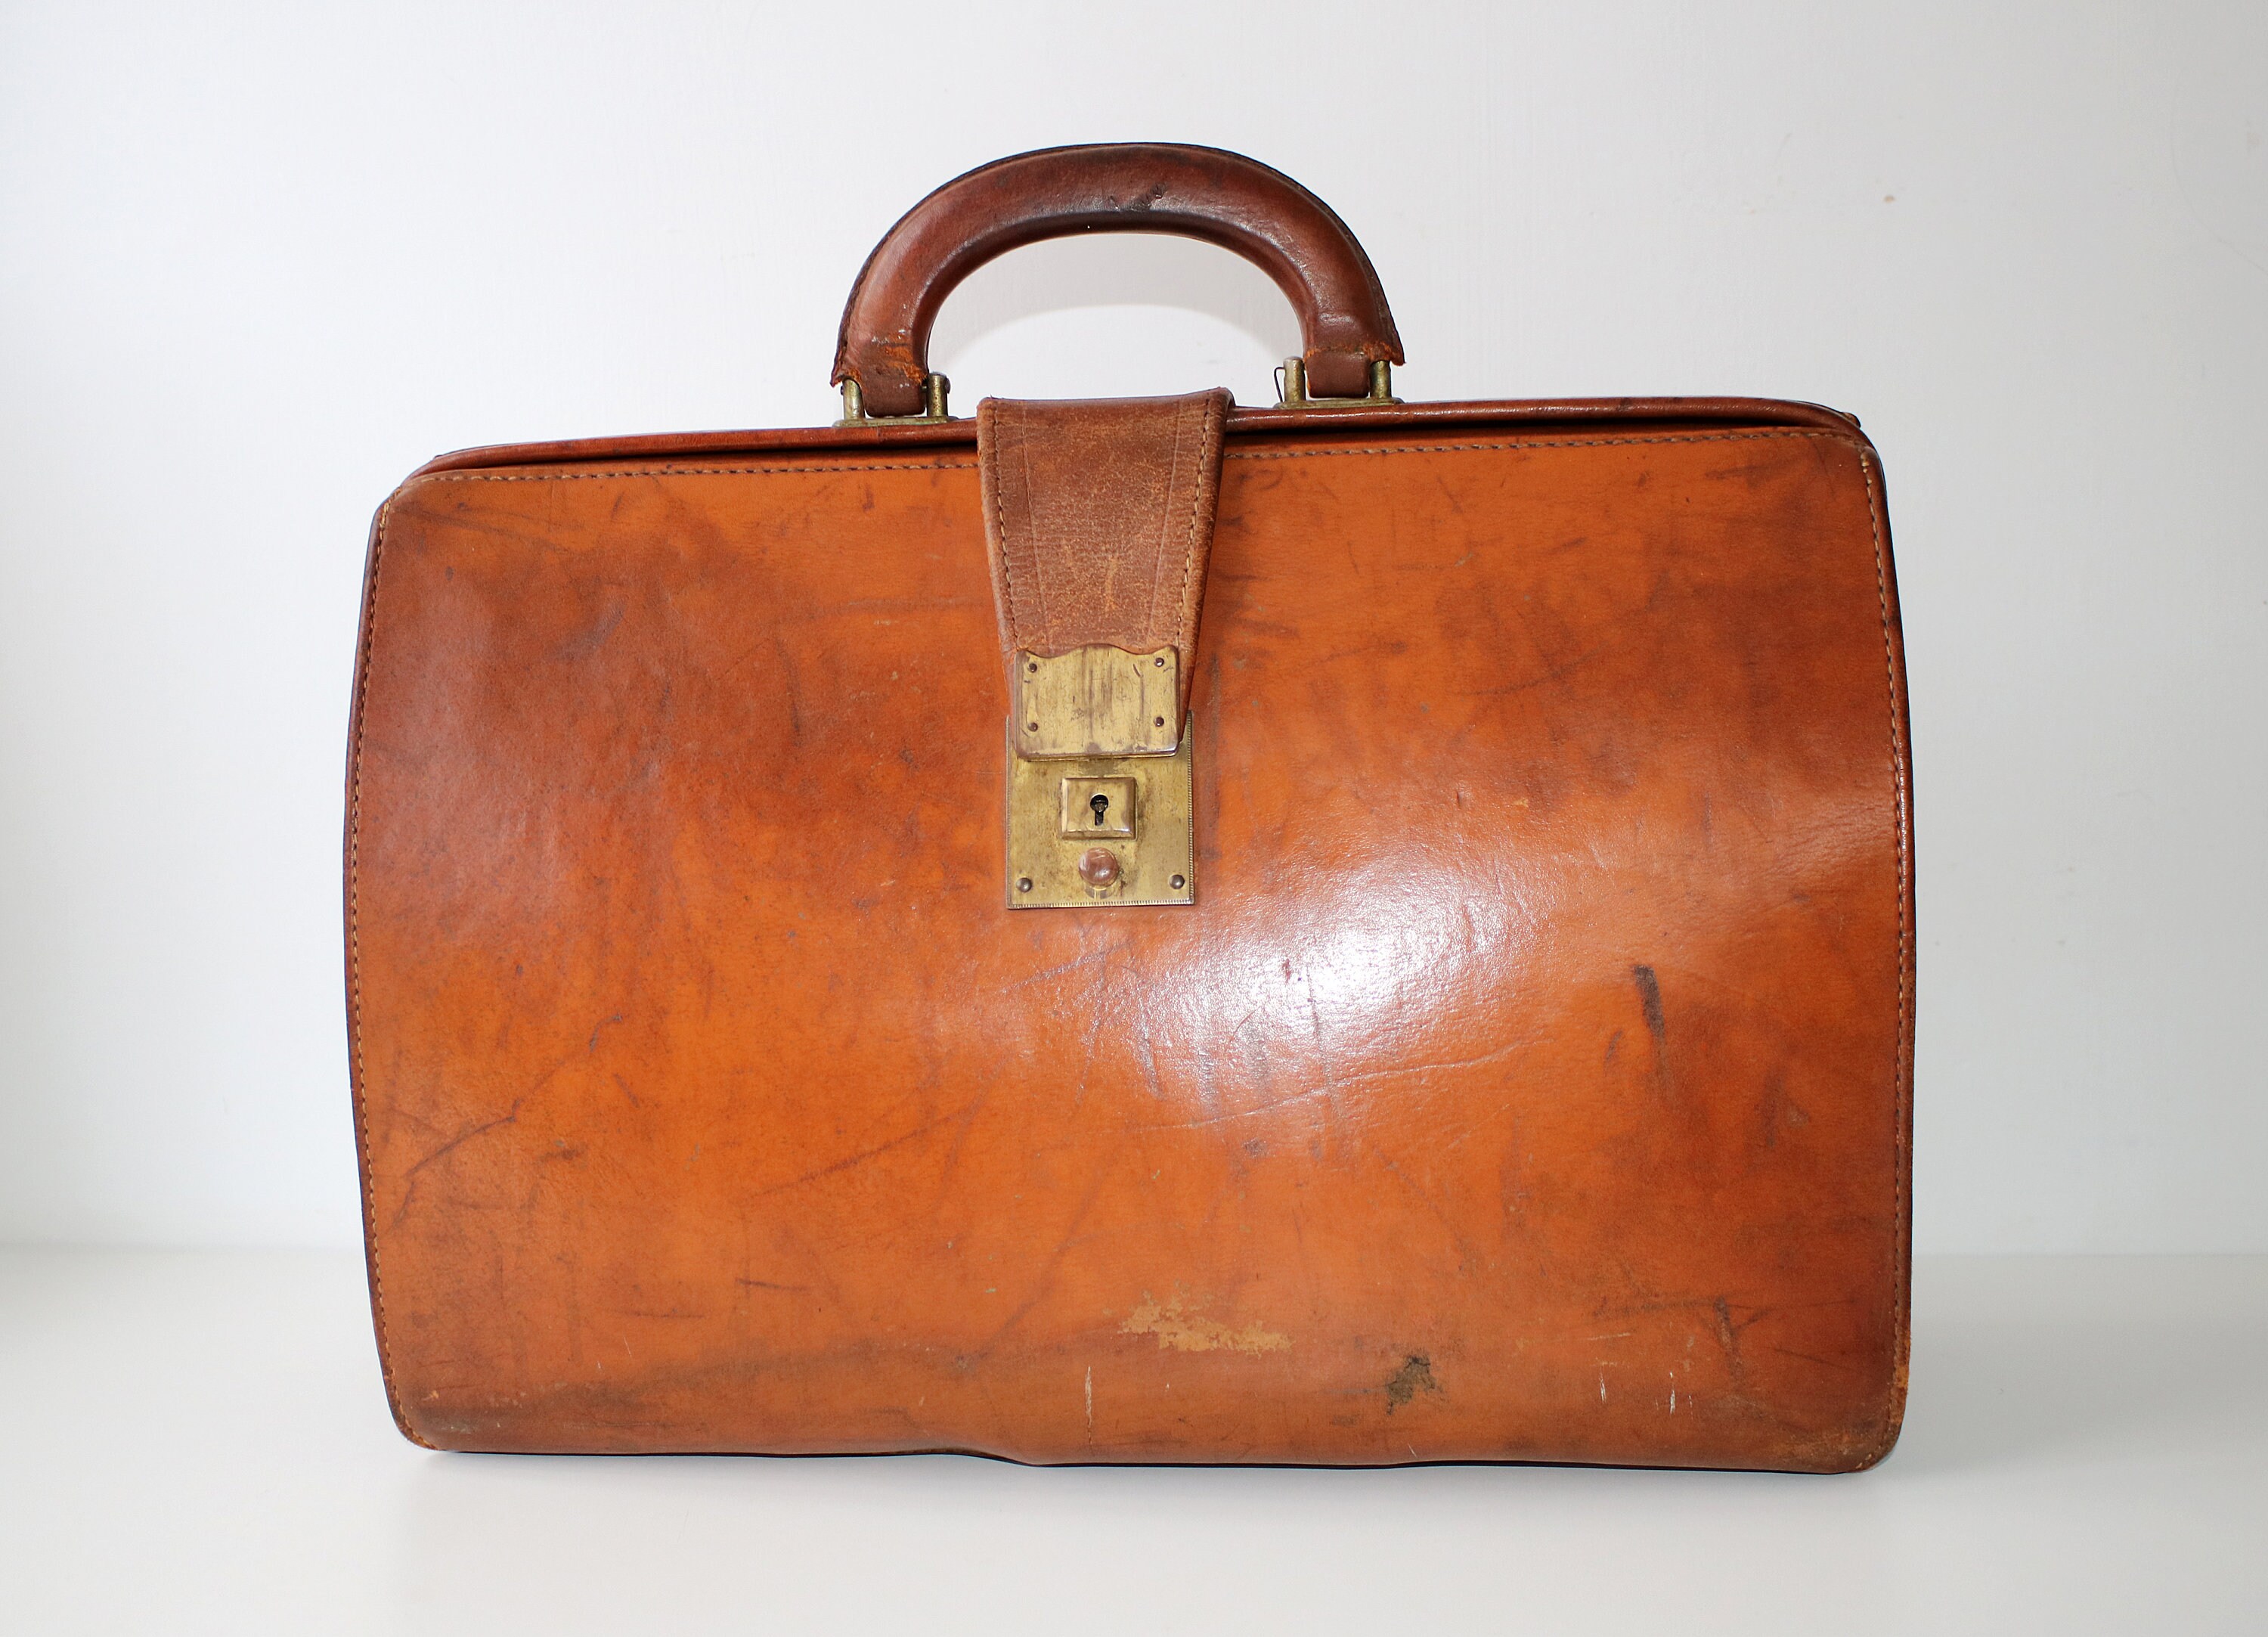 Vintage leather briefcase - tan brown - lovely worn look